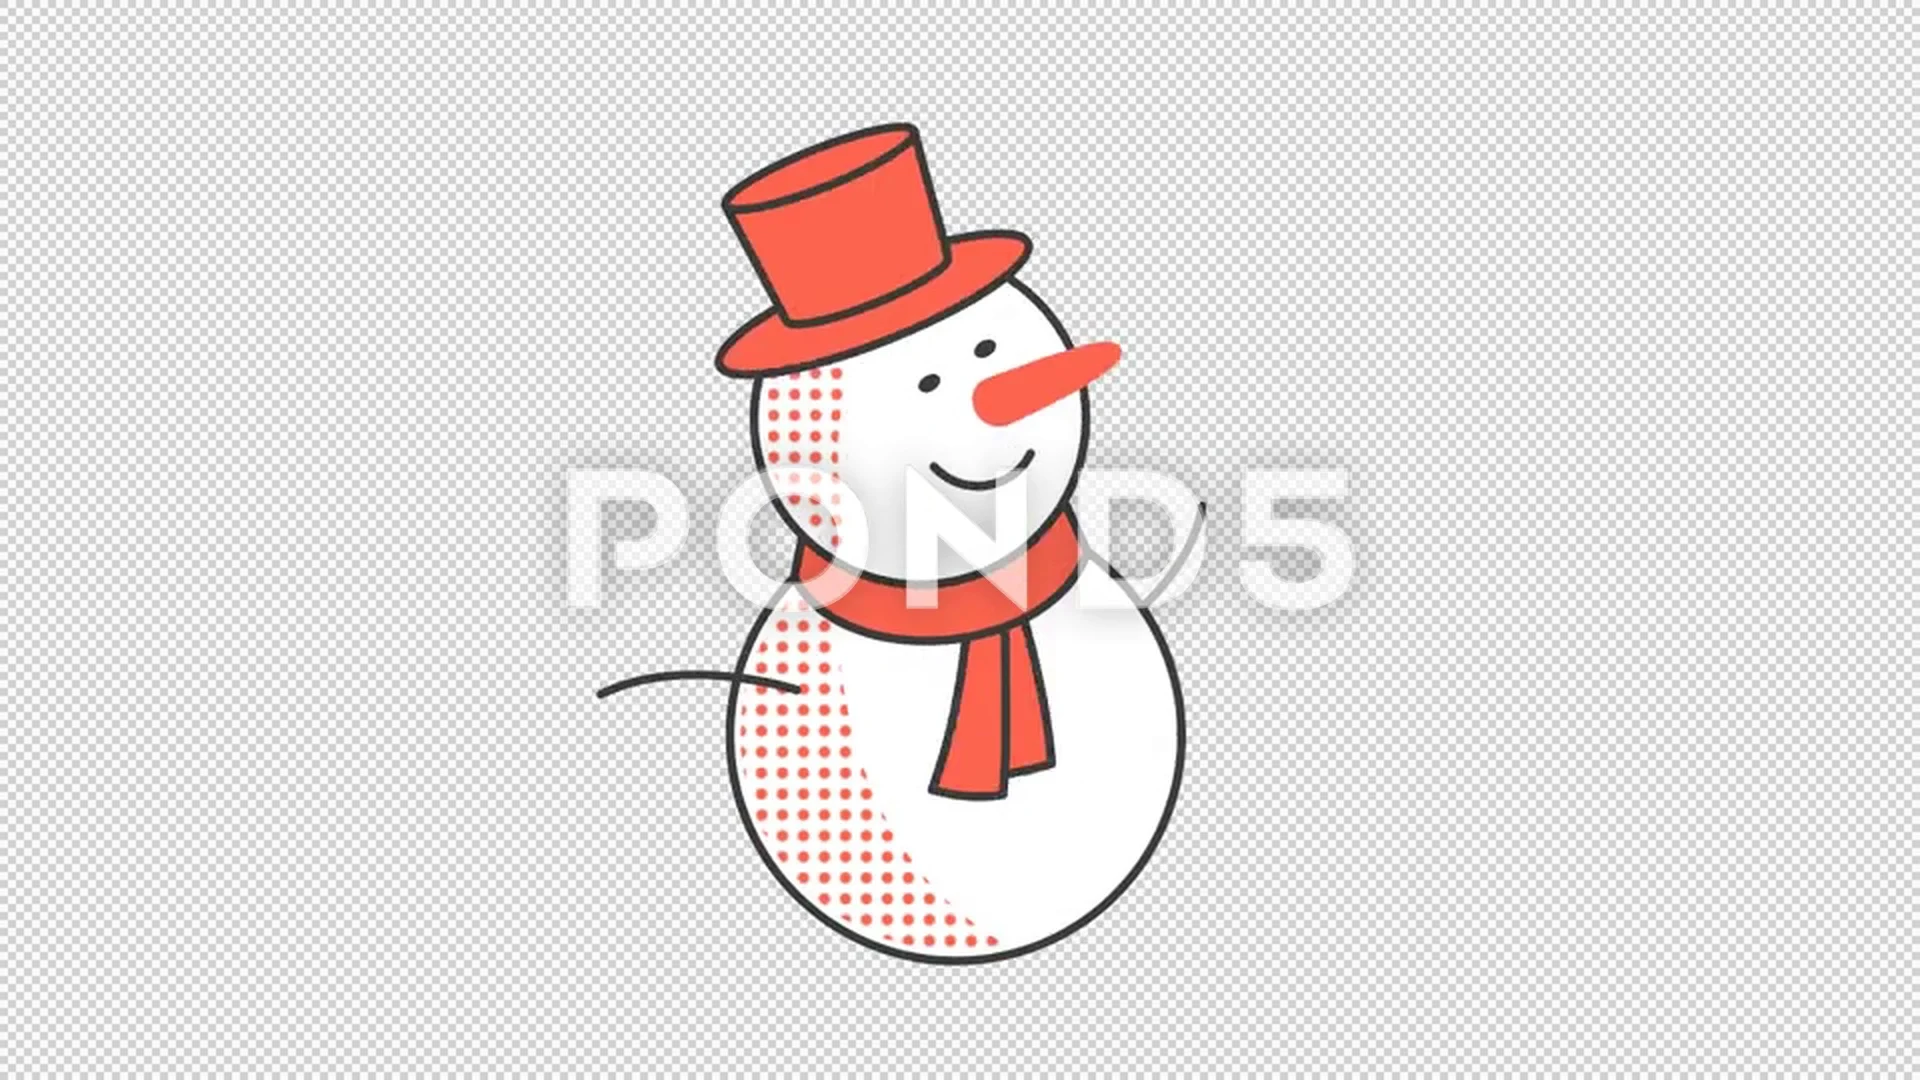 https://images.pond5.com/merry-christmas-snowman-red-hat-footage-097820660_prevstill.jpeg